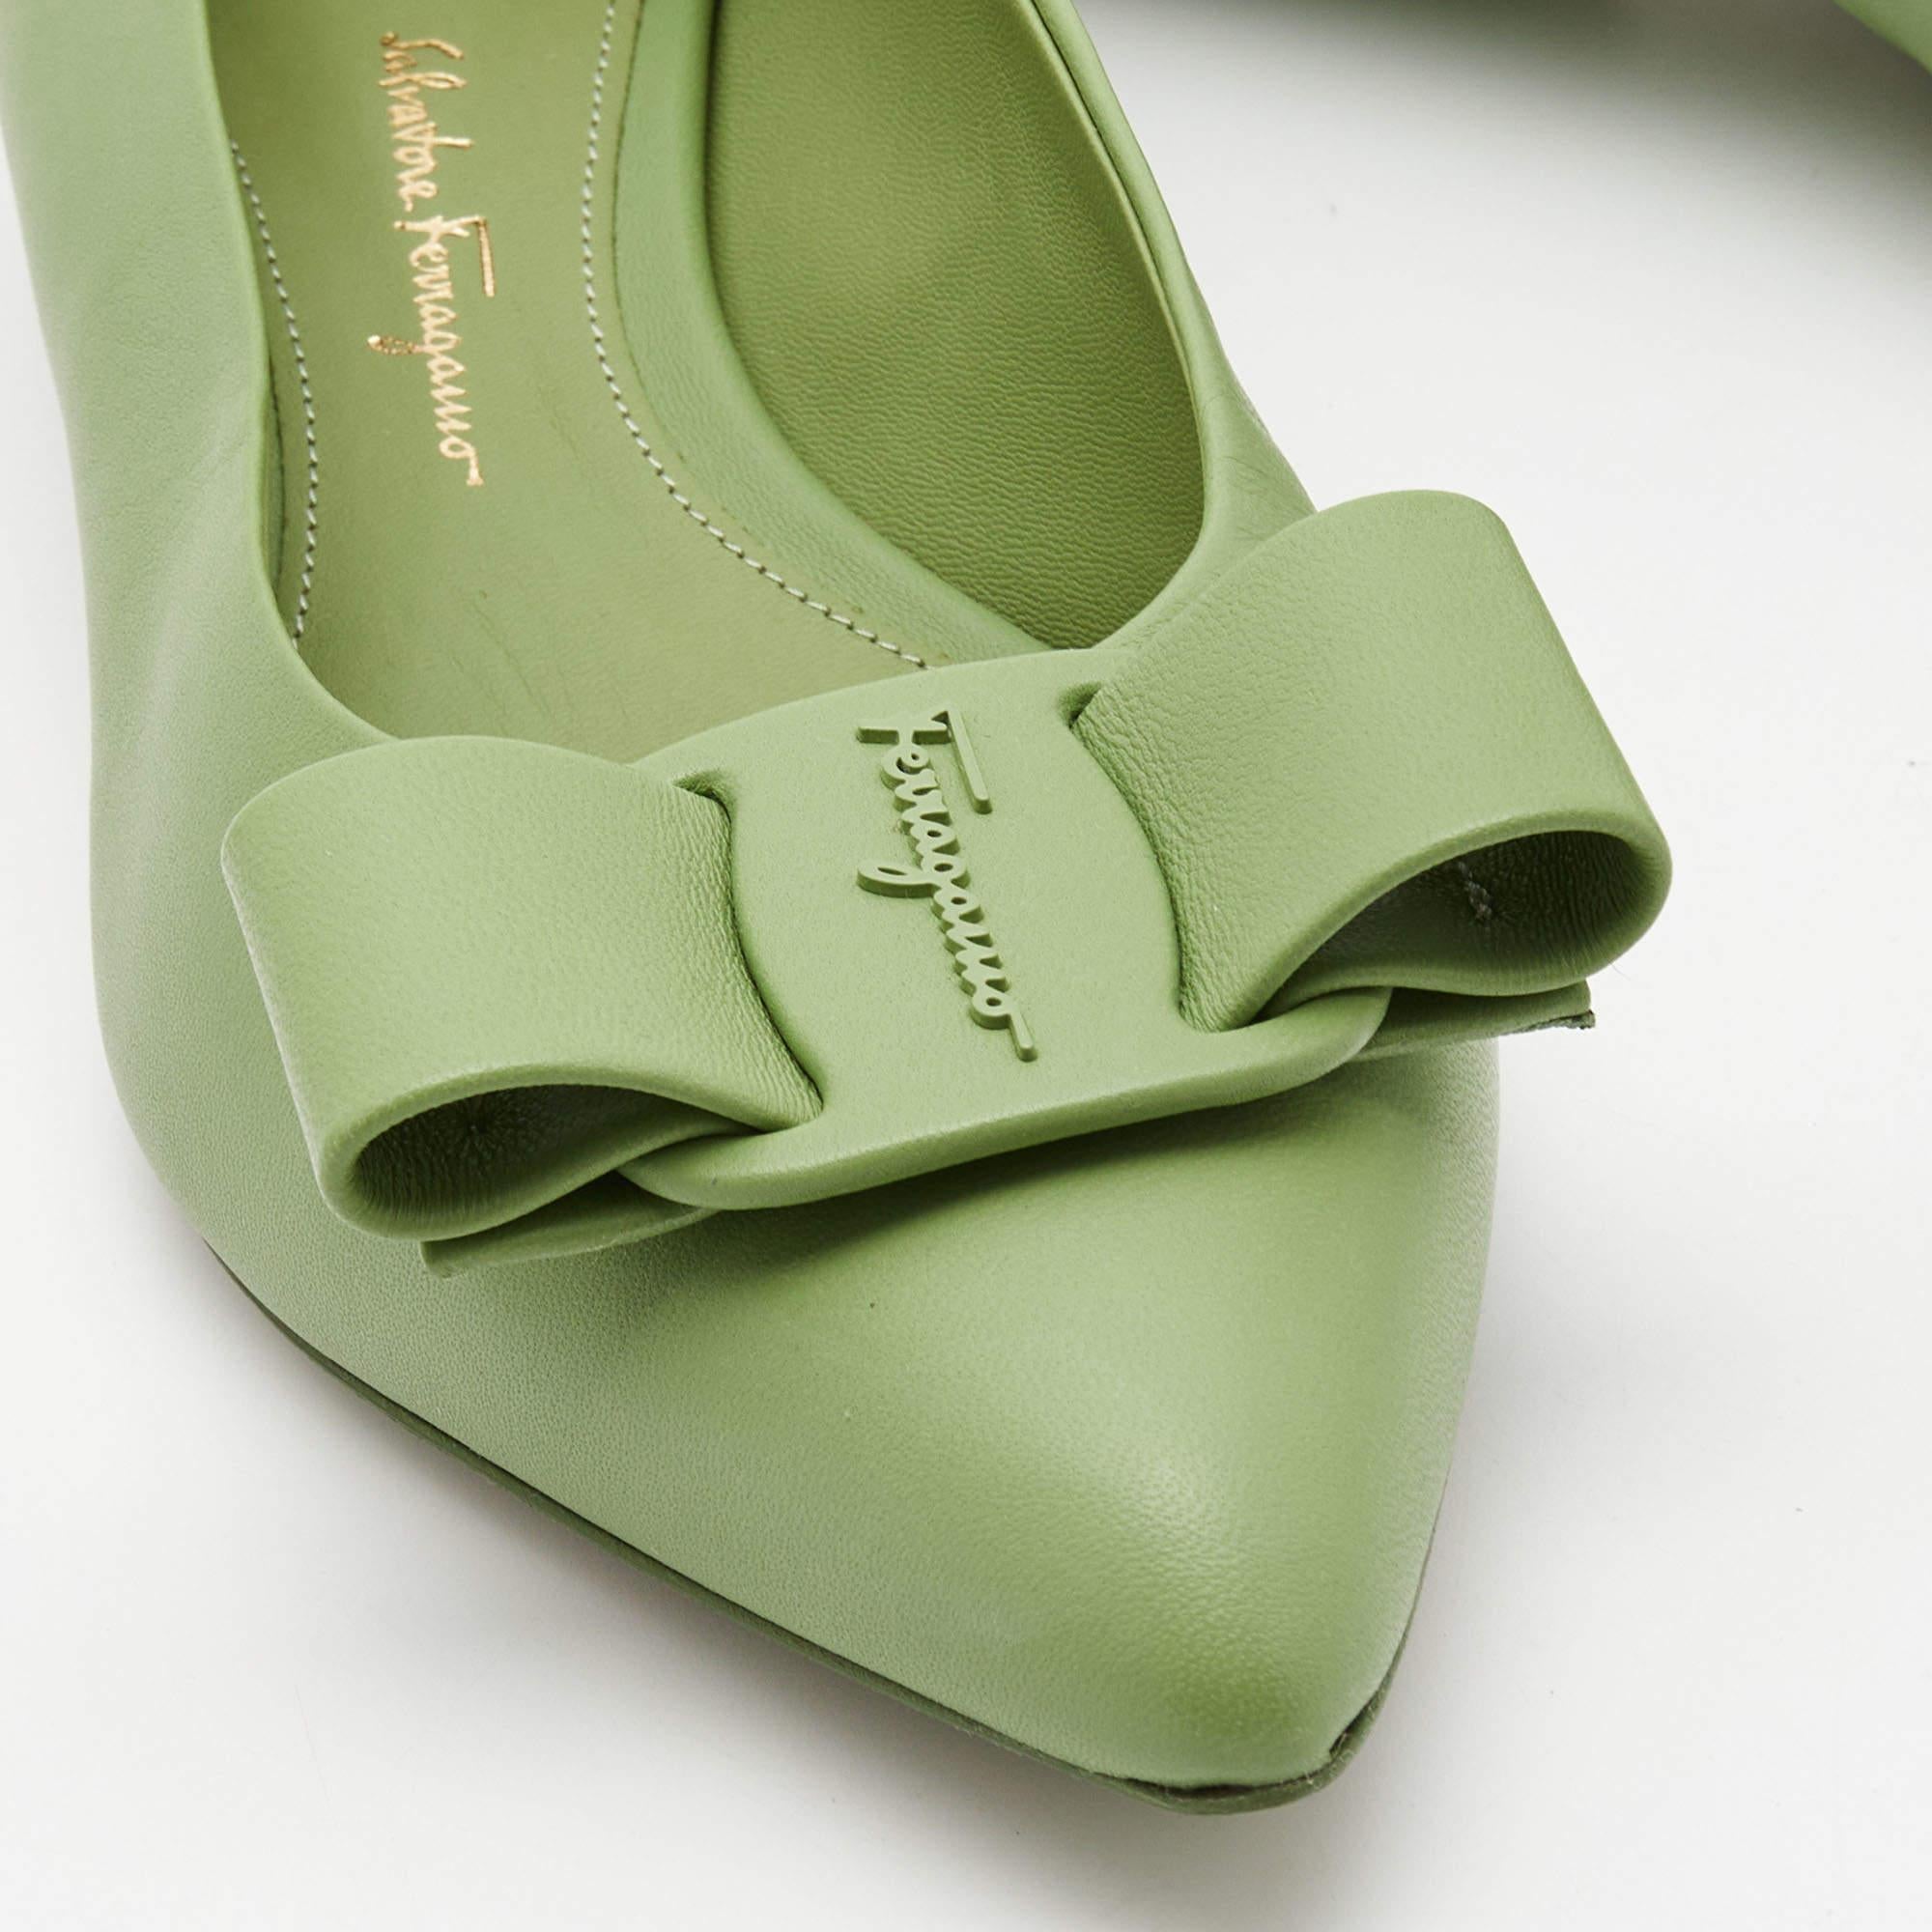 Salvatore Ferragamo Green Leather Viva Bow Ballet Flats Size 39 1